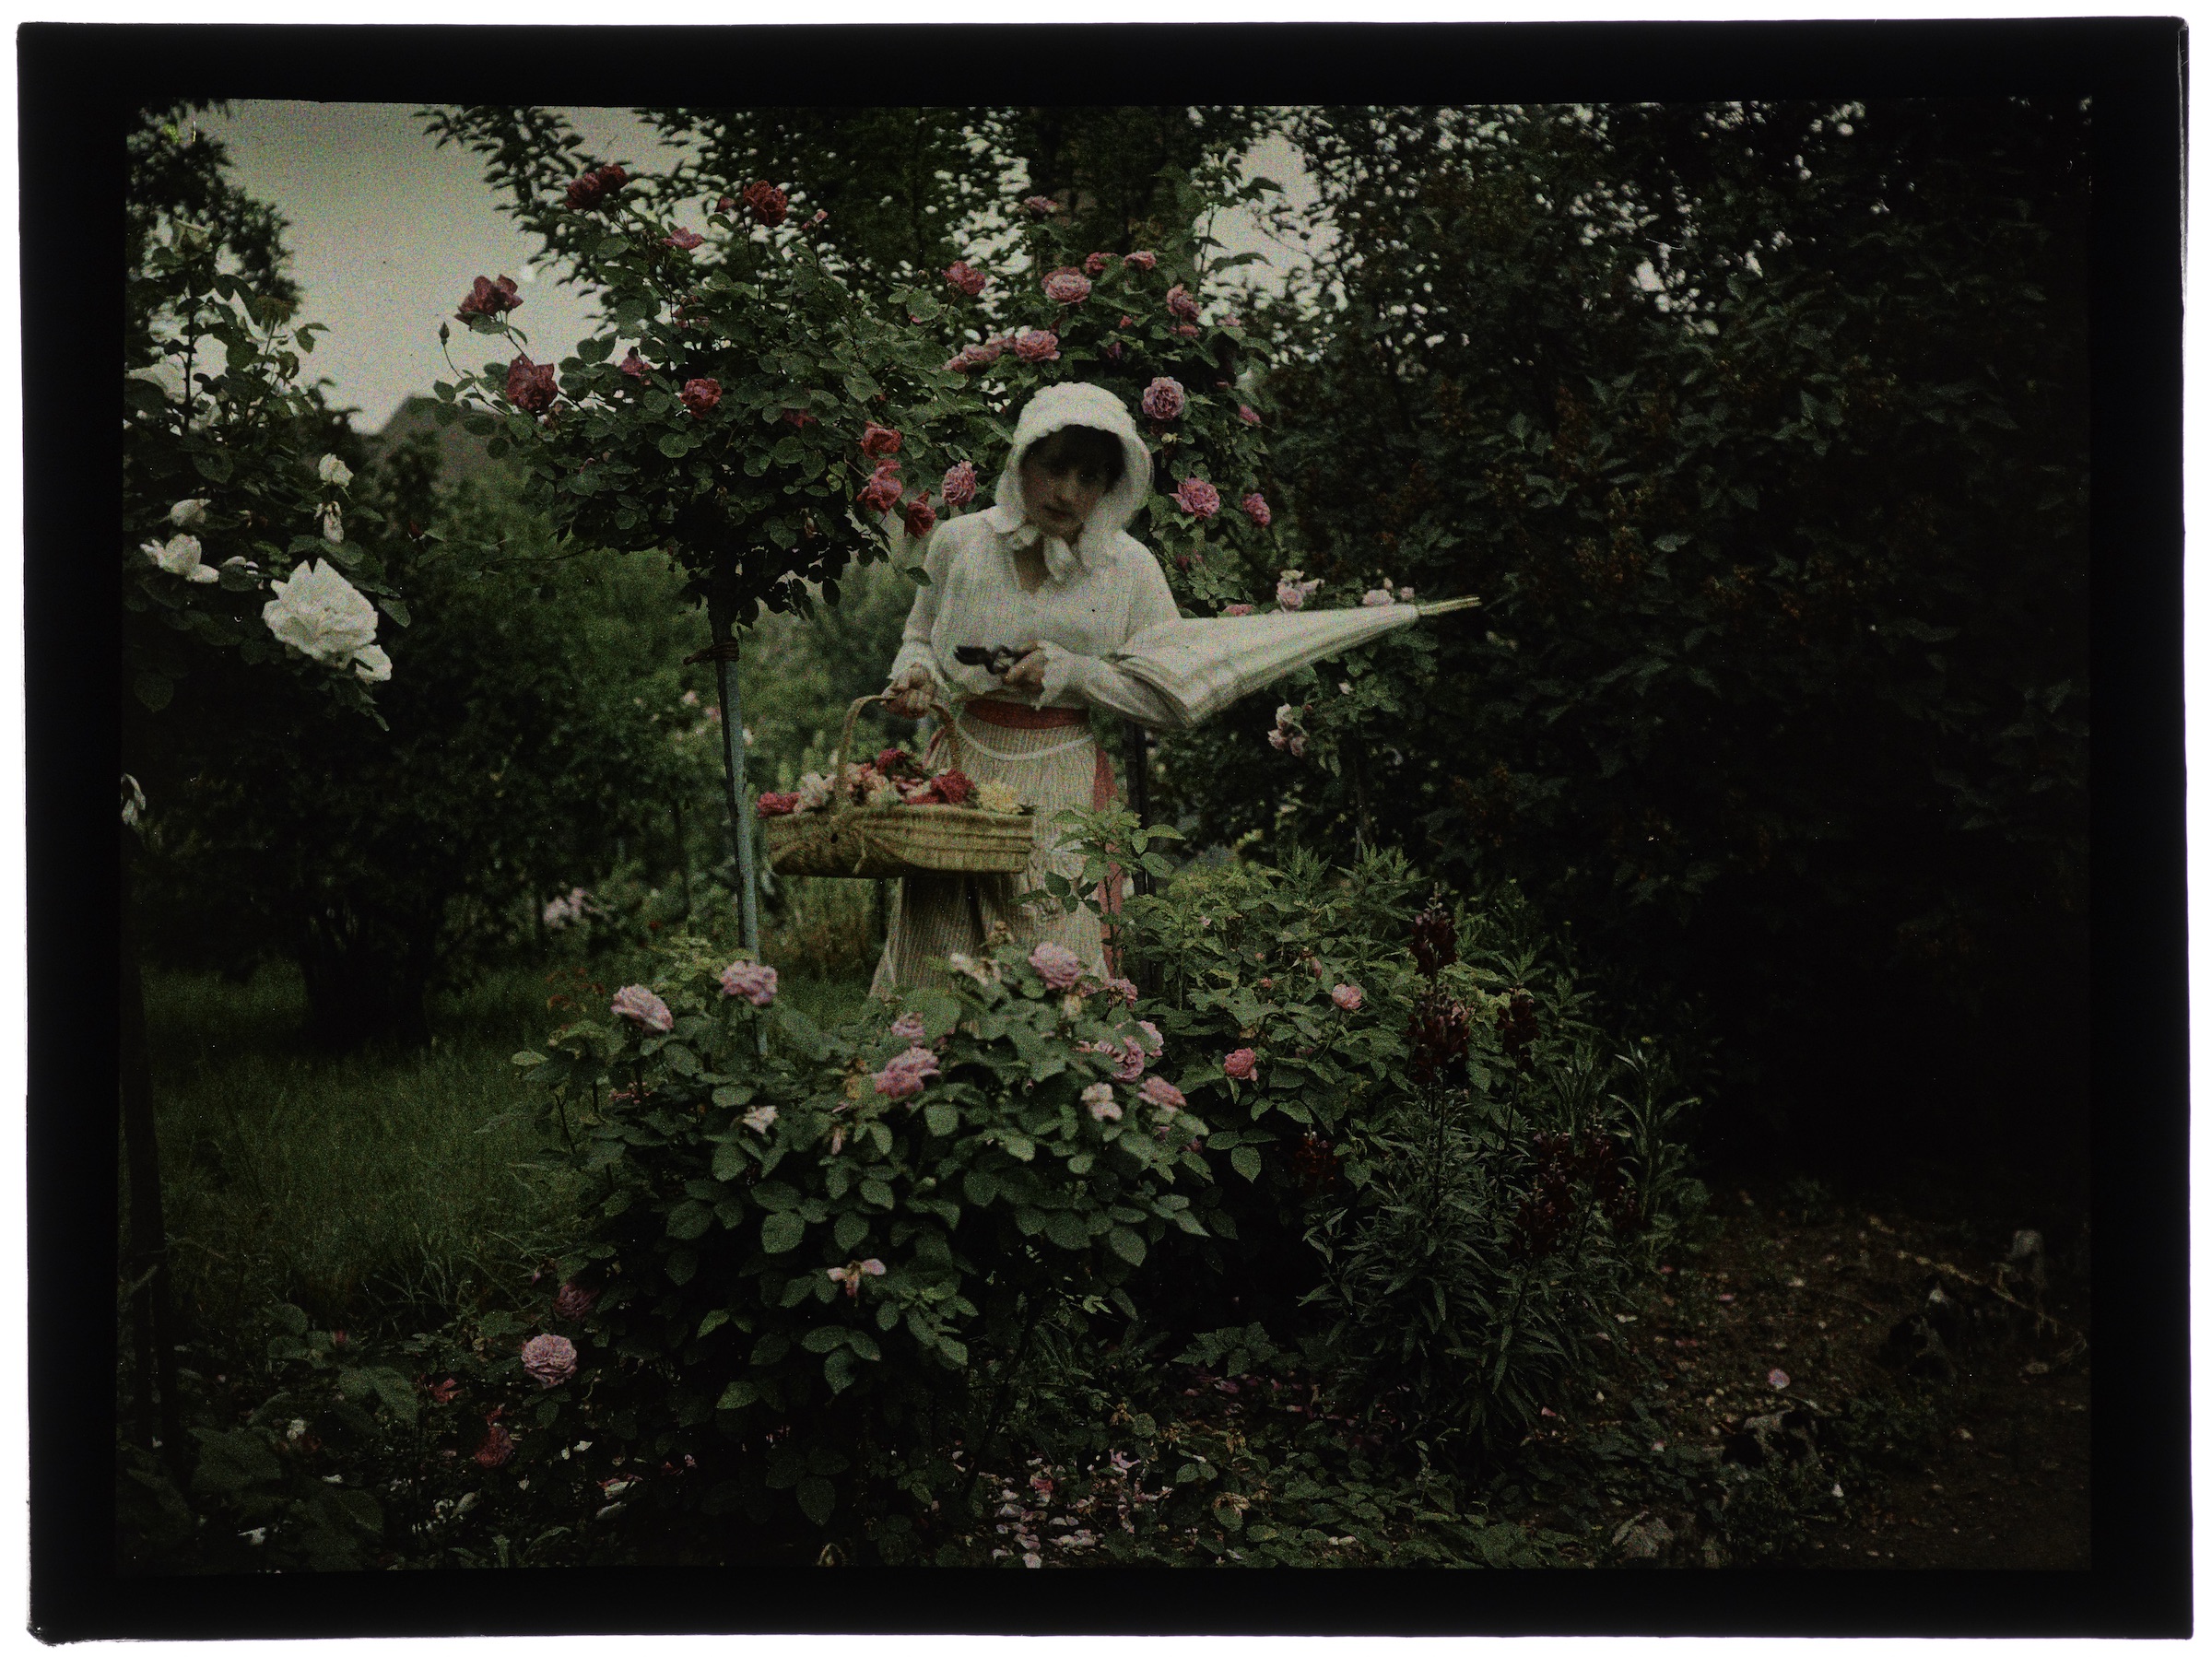 Femme en hâlette au jardin fleuri